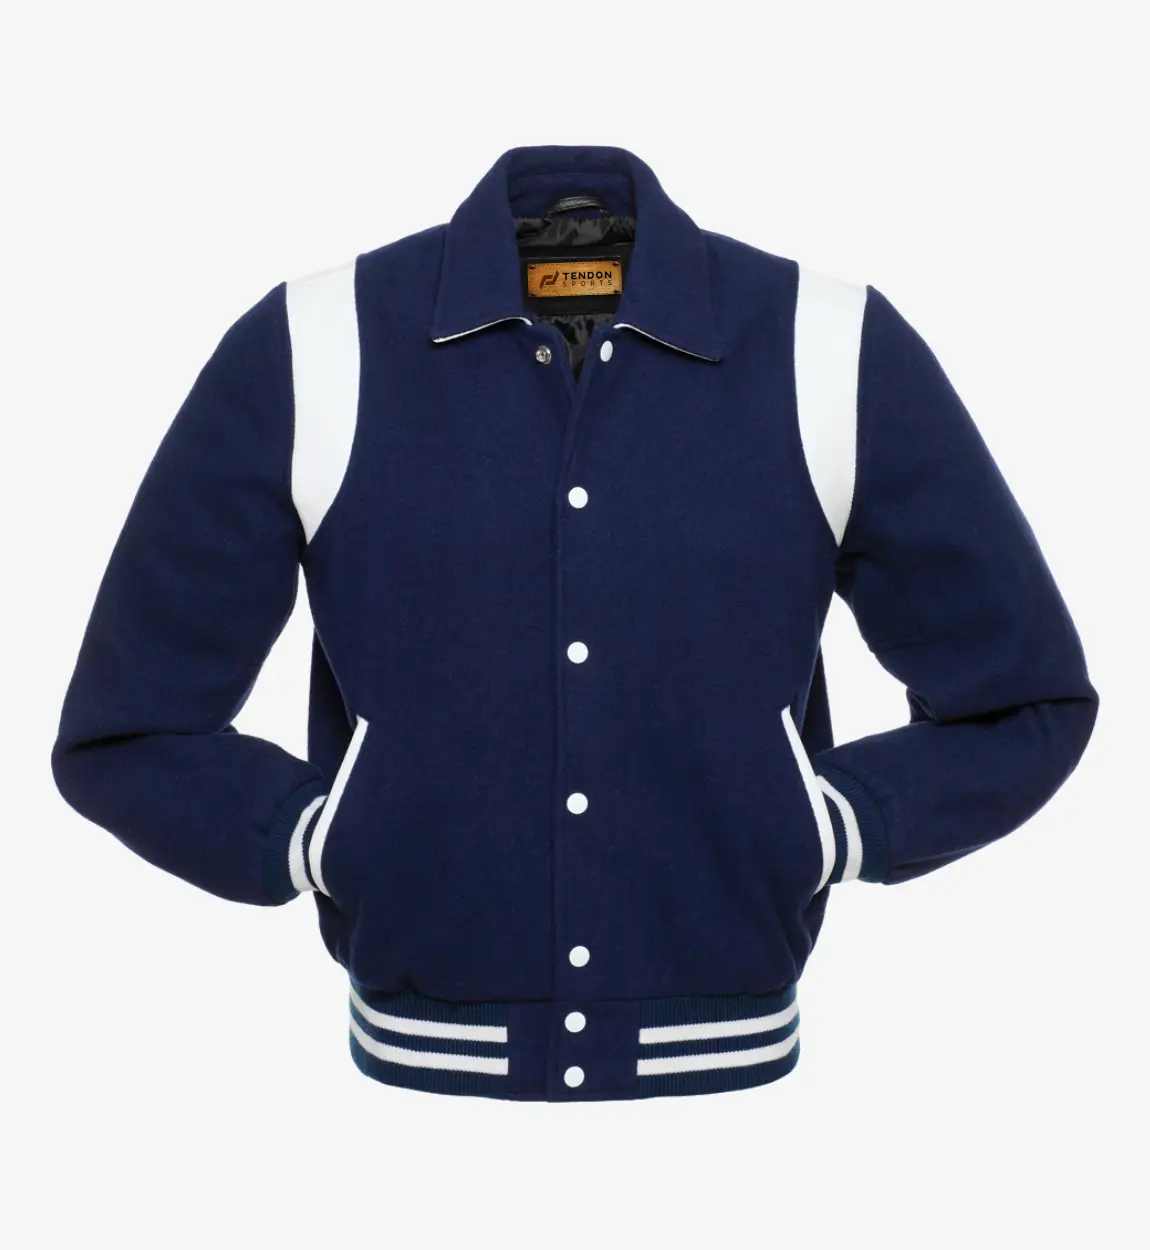 Tendon Sports Varsity Jacket collor style